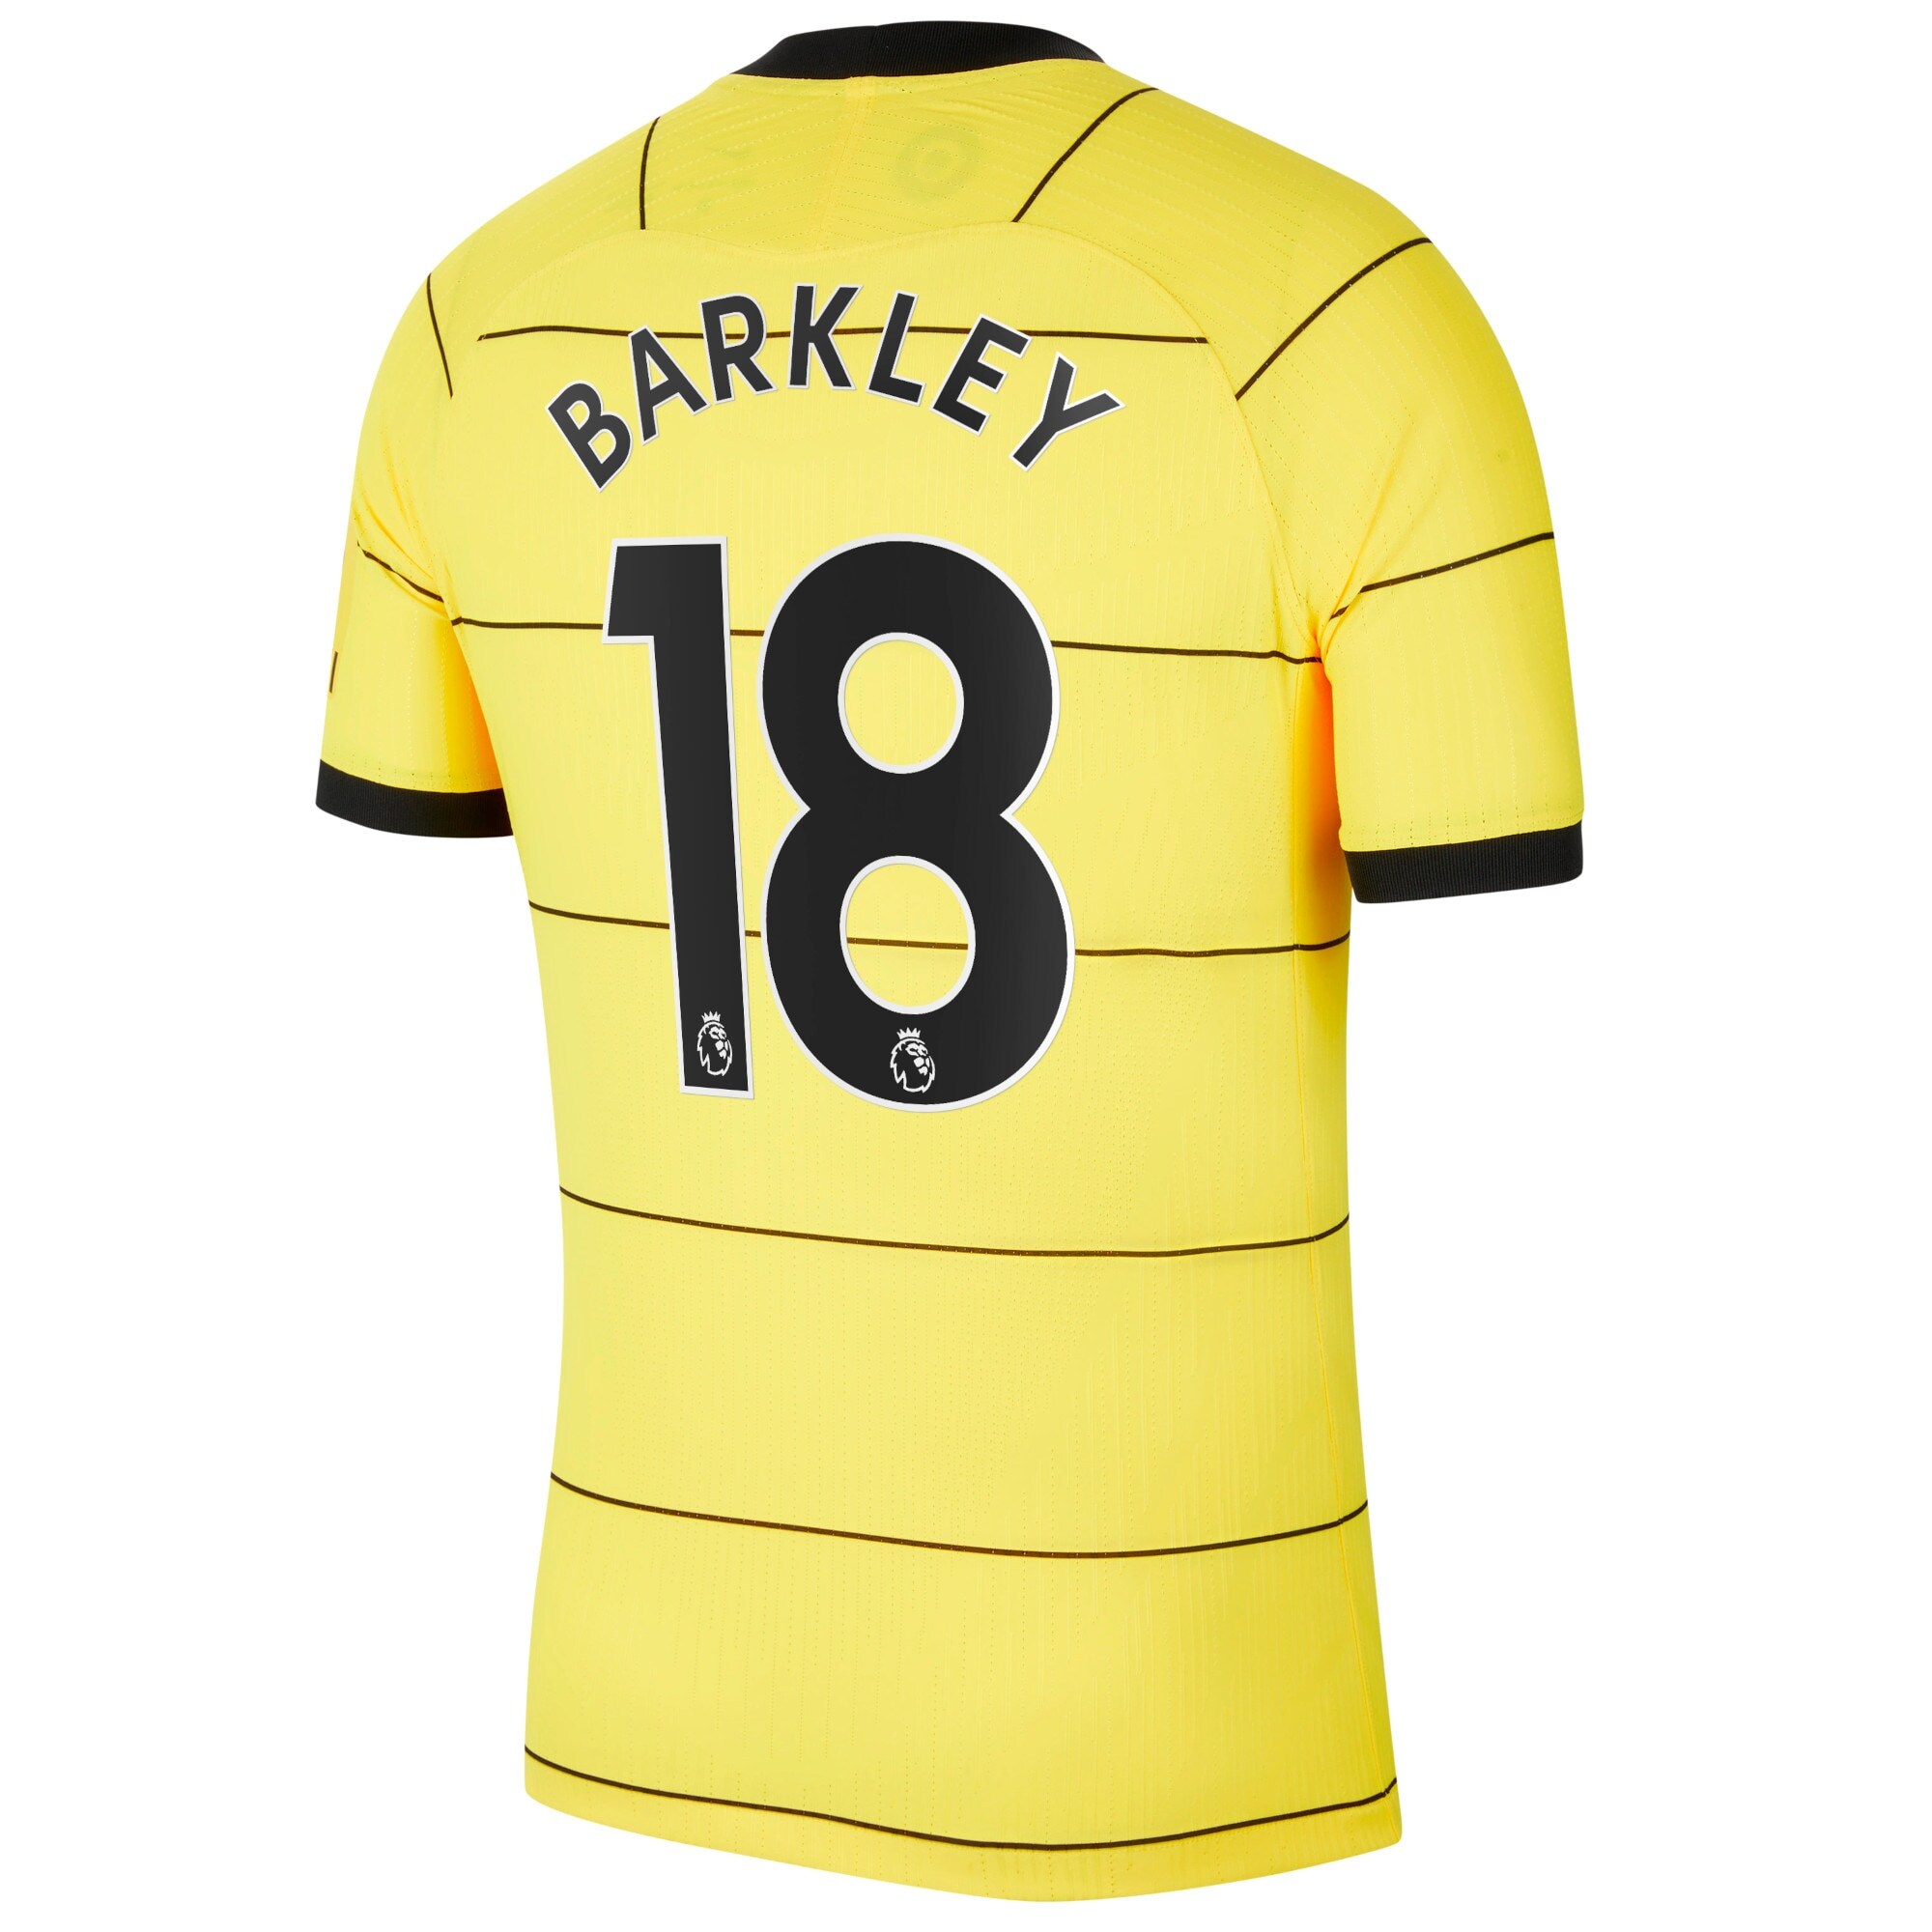 Chelsea Away Vapor Match Shirt 2021-22 with Barkley 18 printing